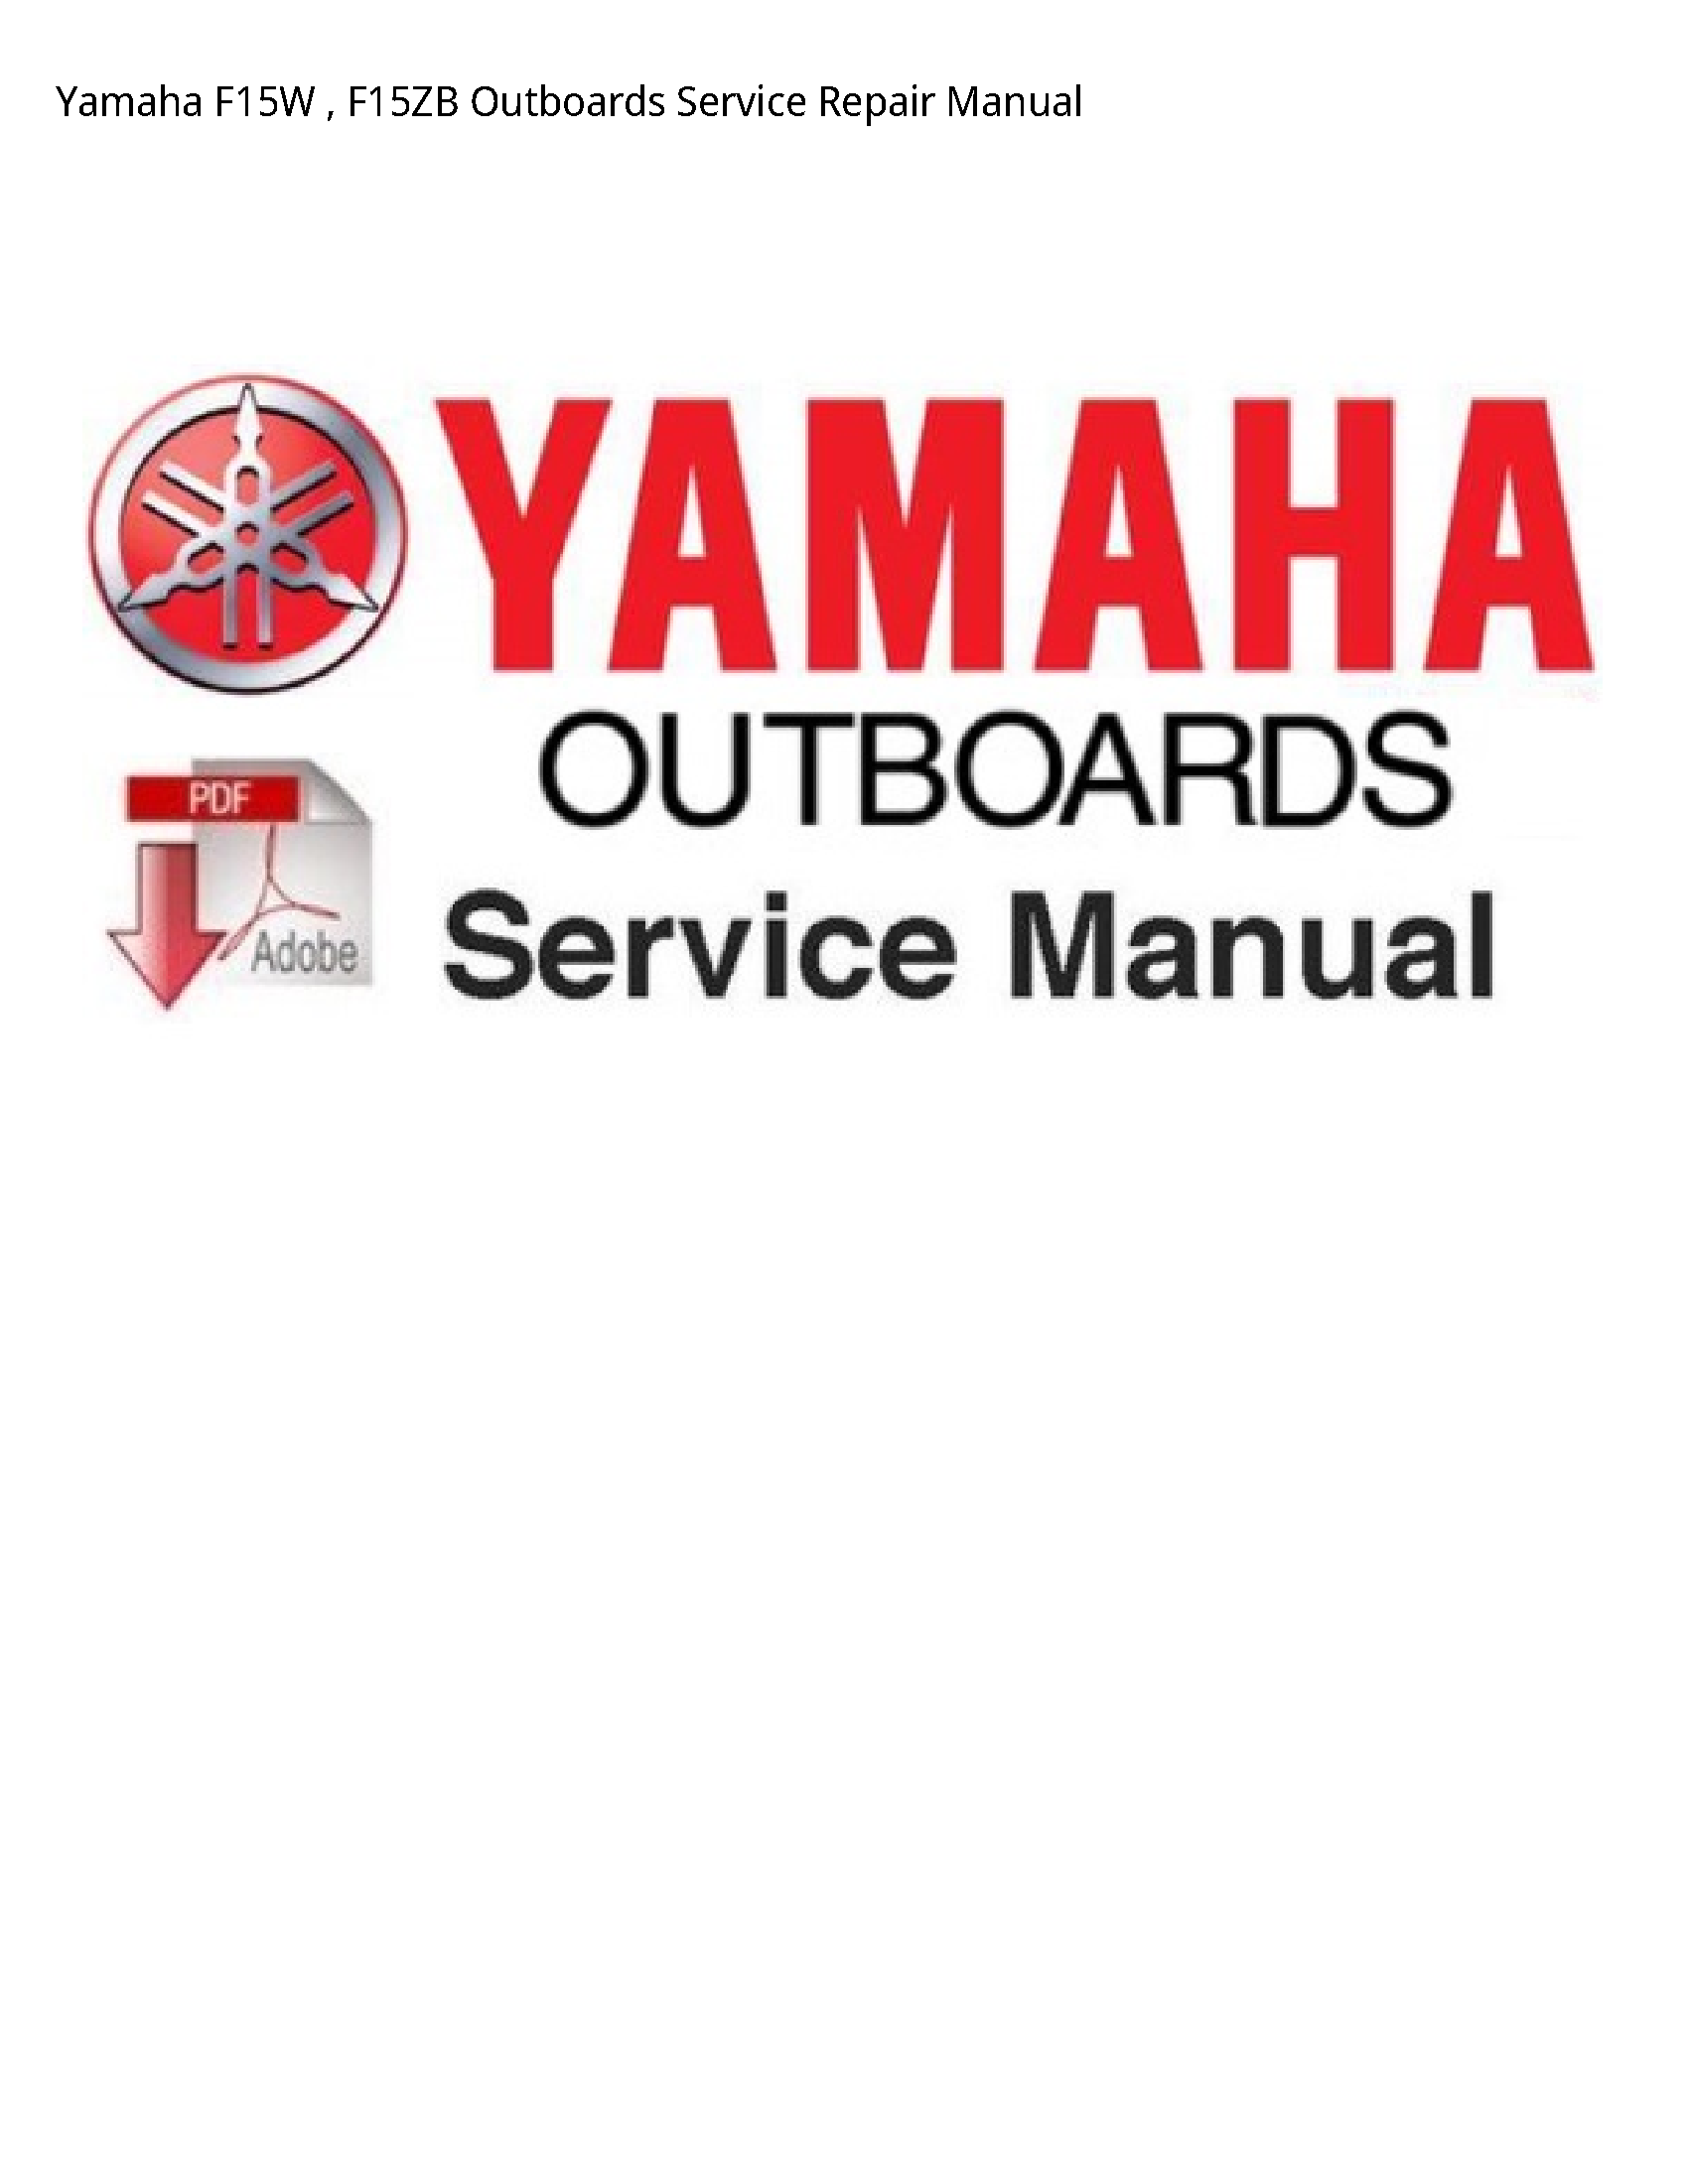 Yamaha F15W Outboards manual